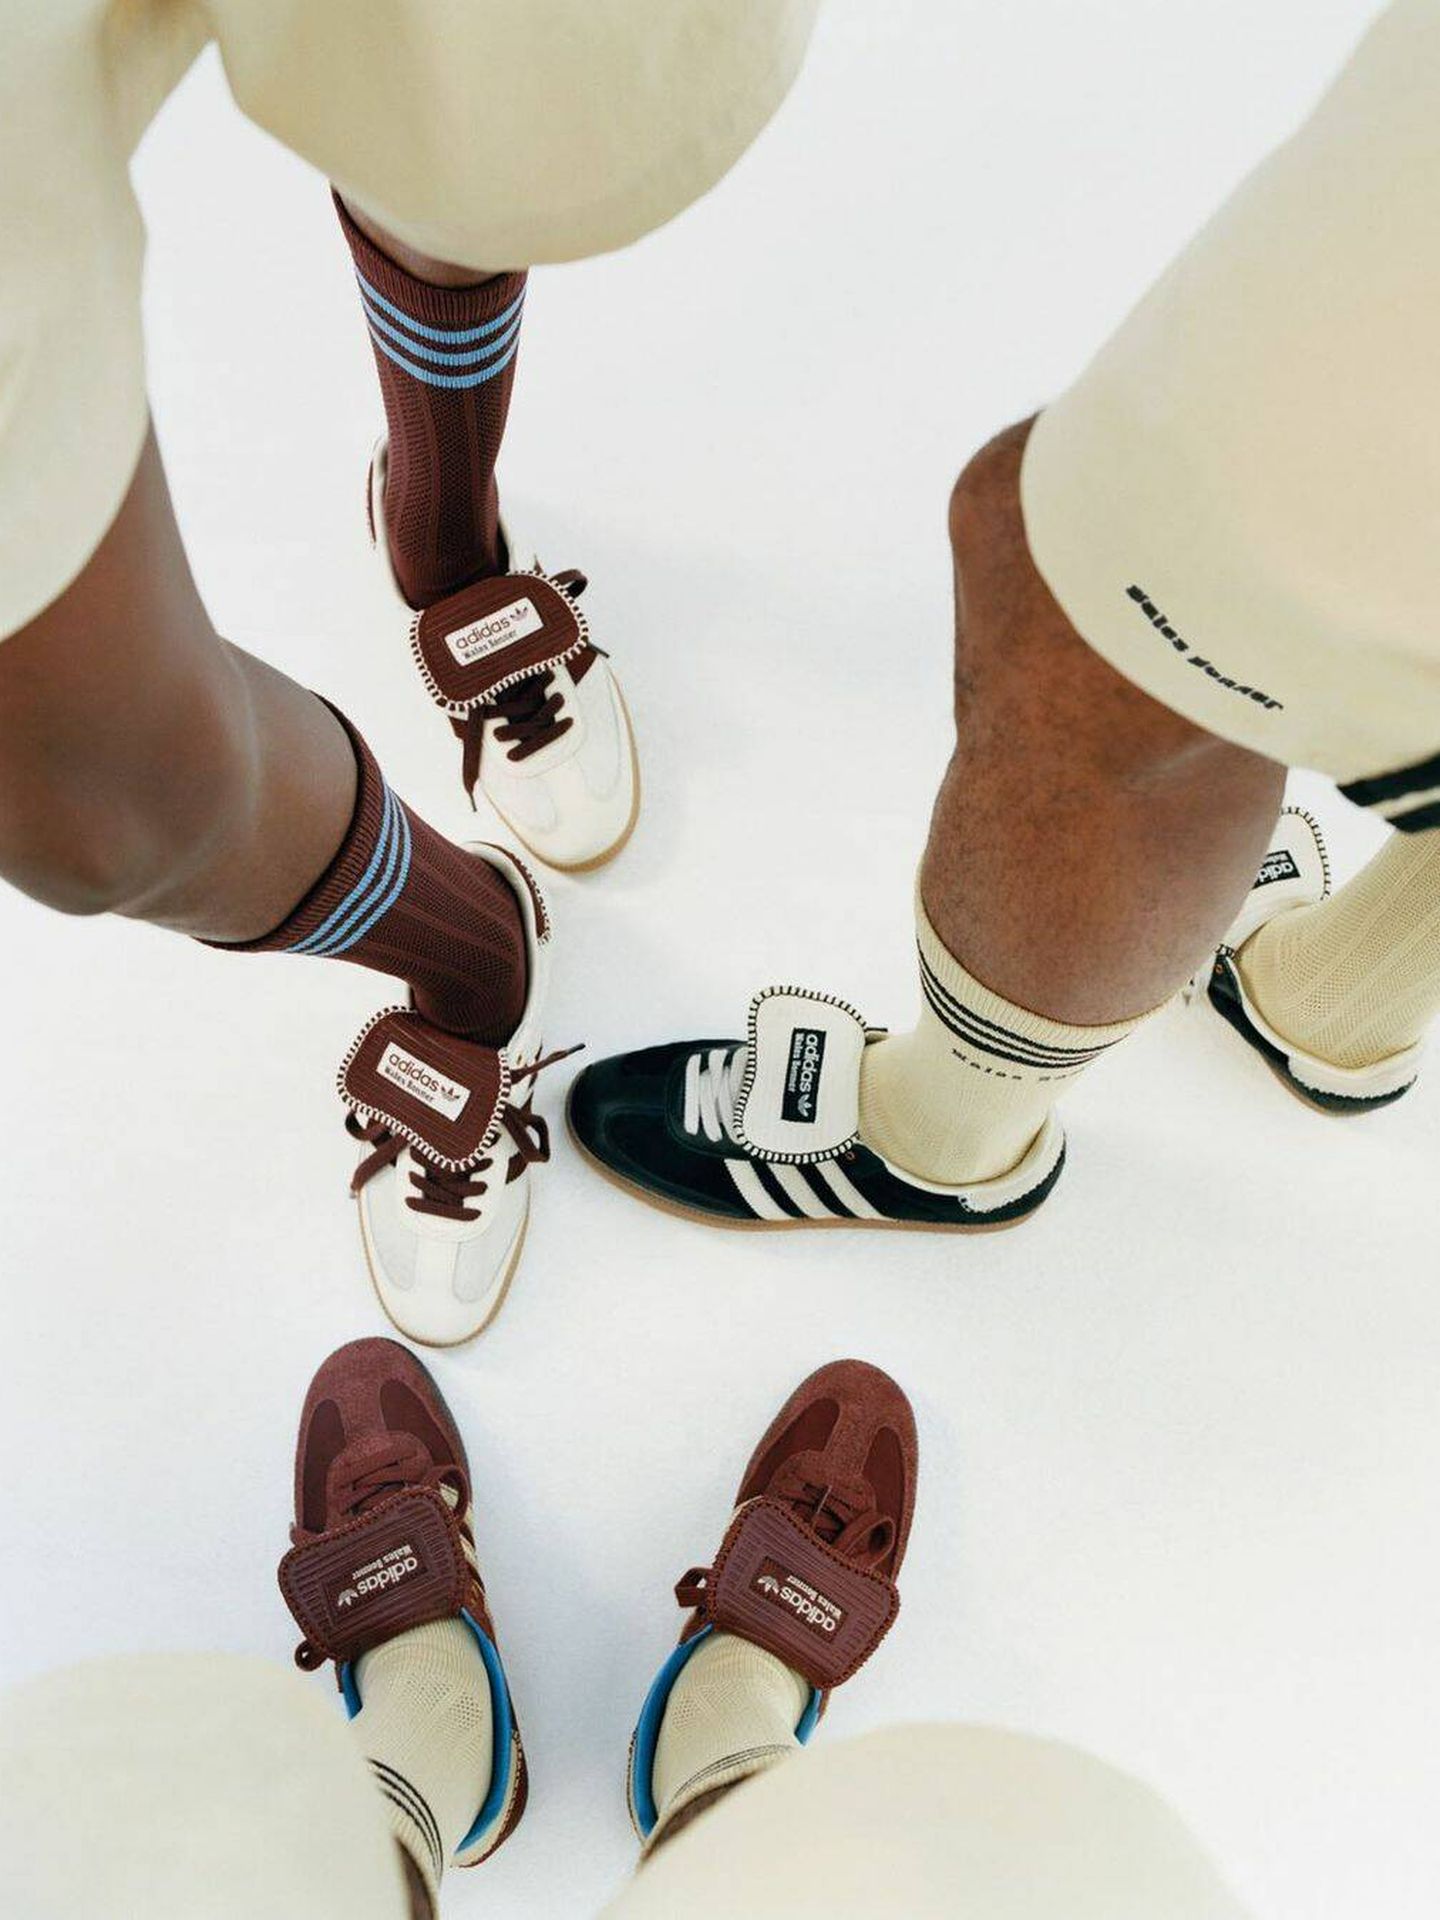 Zapatillas de AdidasxWales Bonner (Instagram @walesbonner)